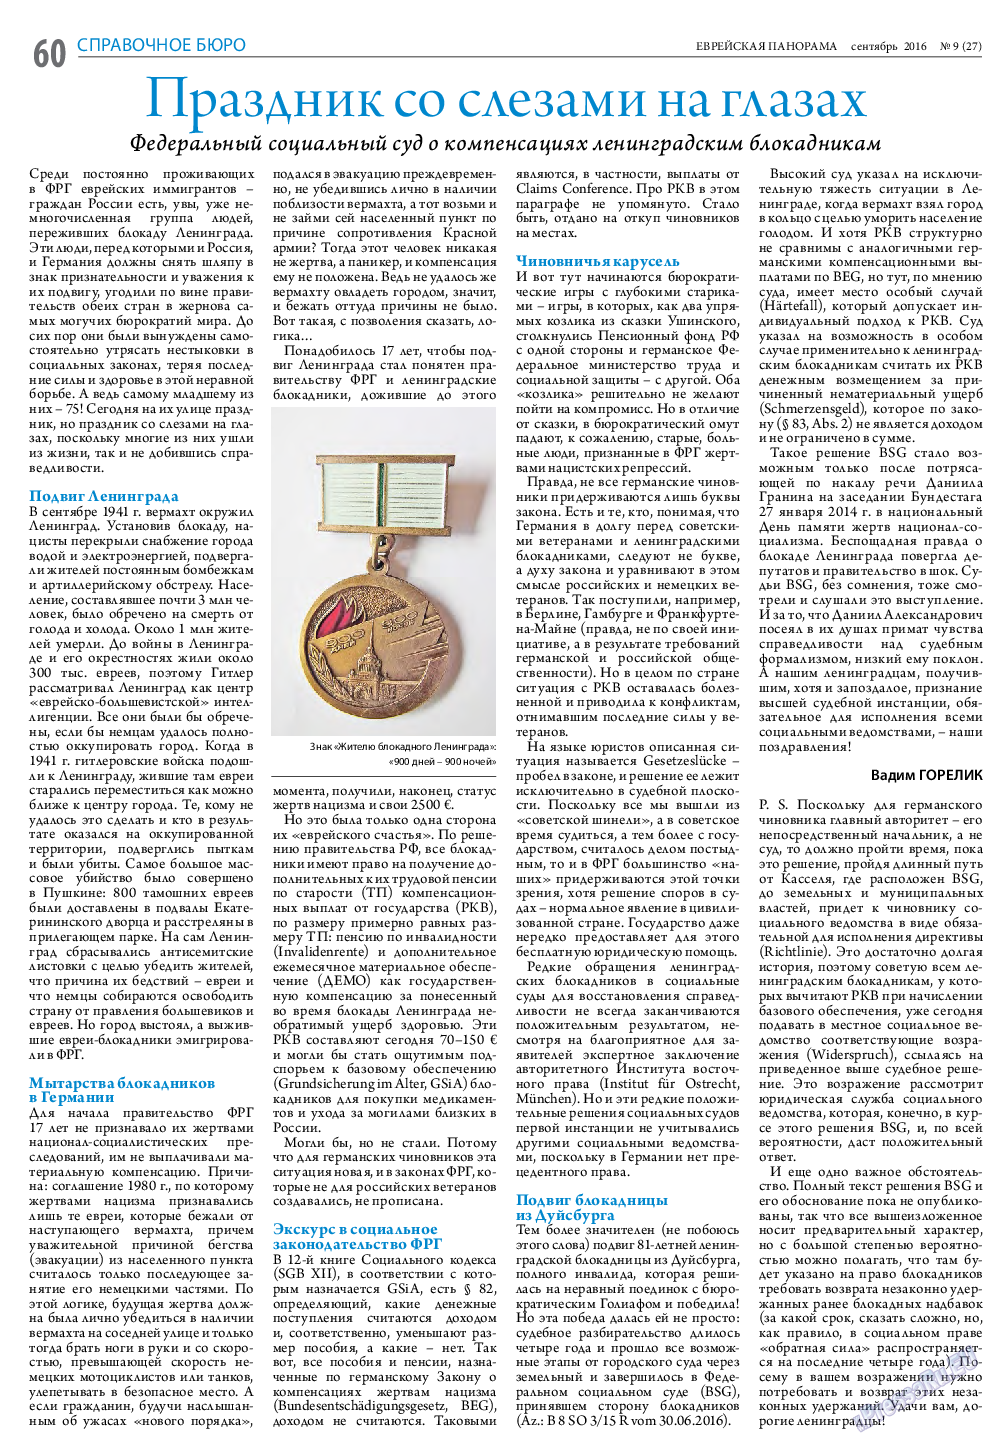 Еврейская панорама, газета. 2016 №9 стр.60